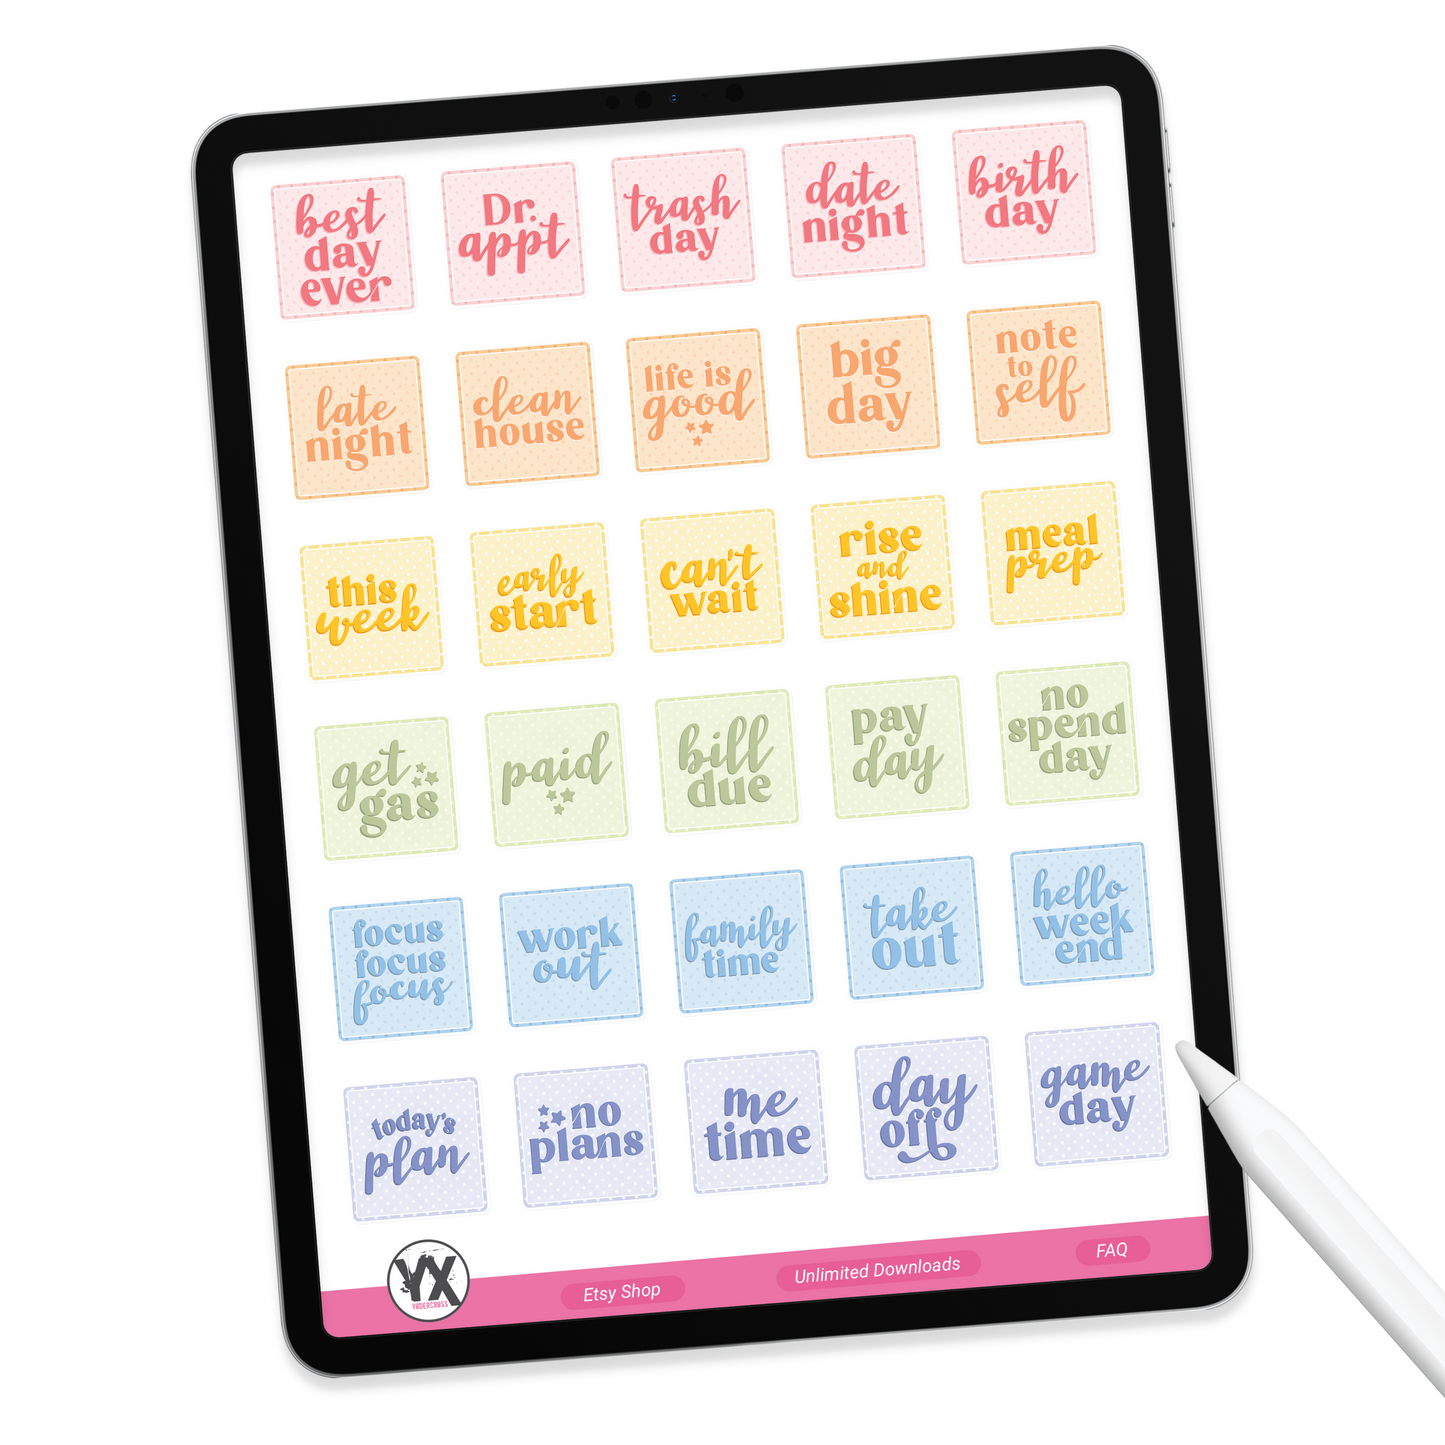 Rainbow Squares Digital Stickers